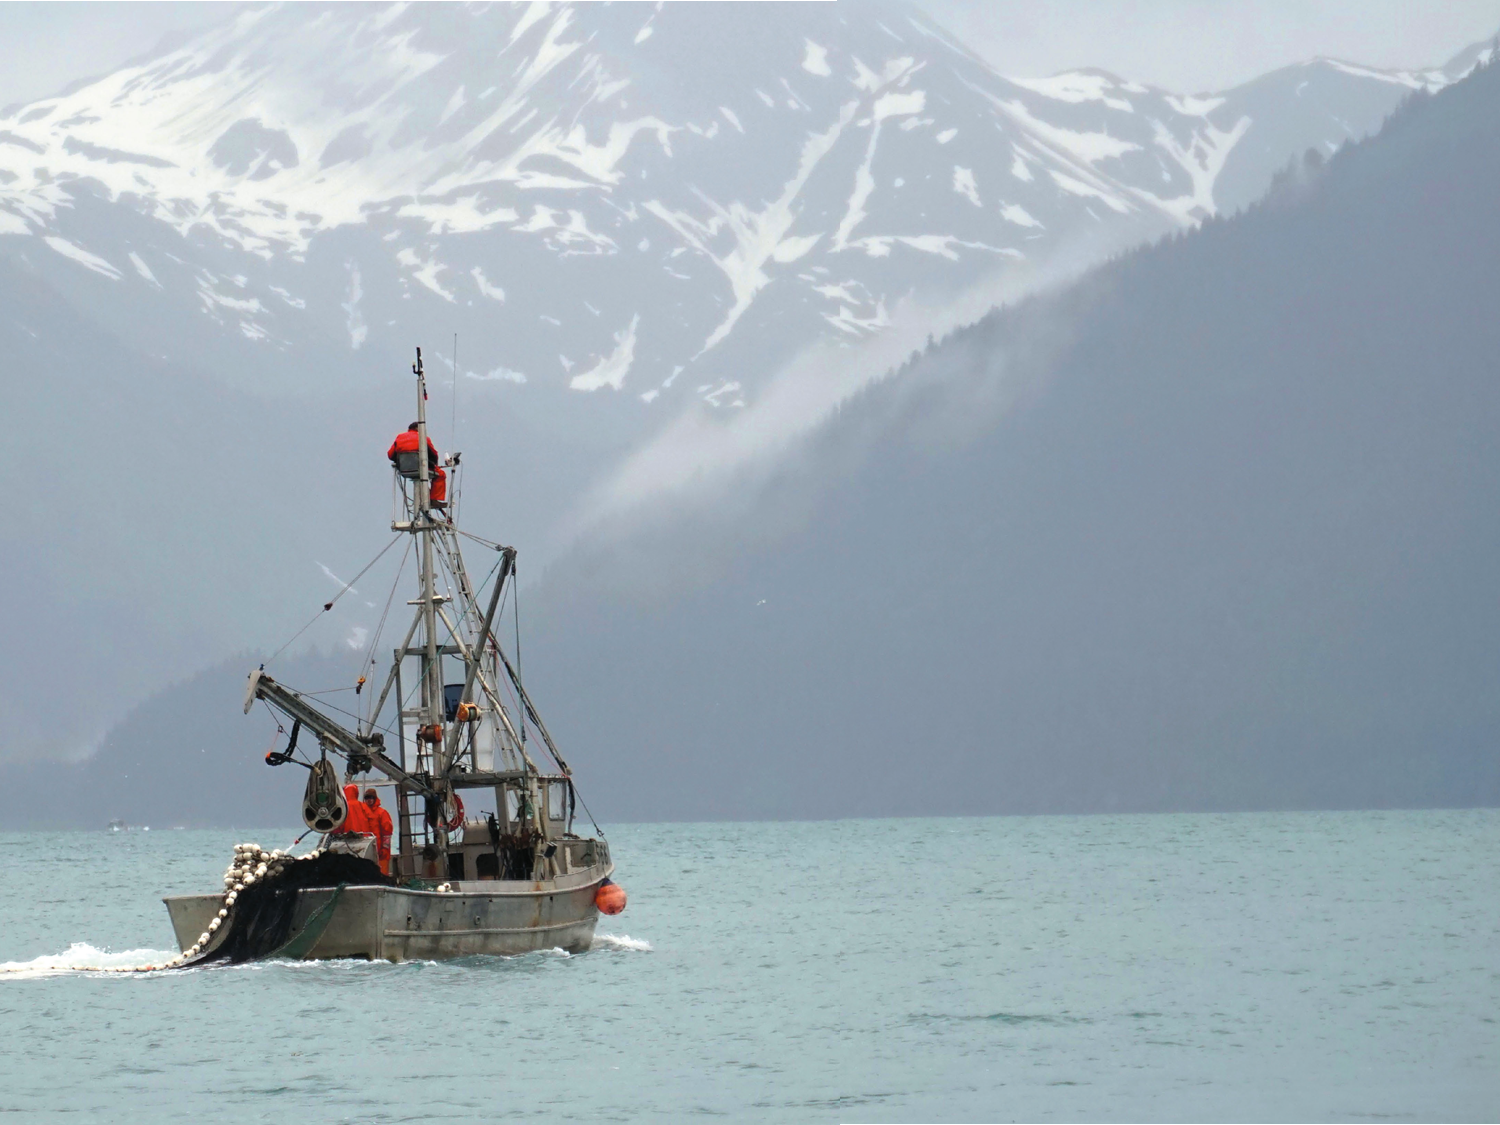 A fishing boat off the coast of Resurrection Bay in Alaska.